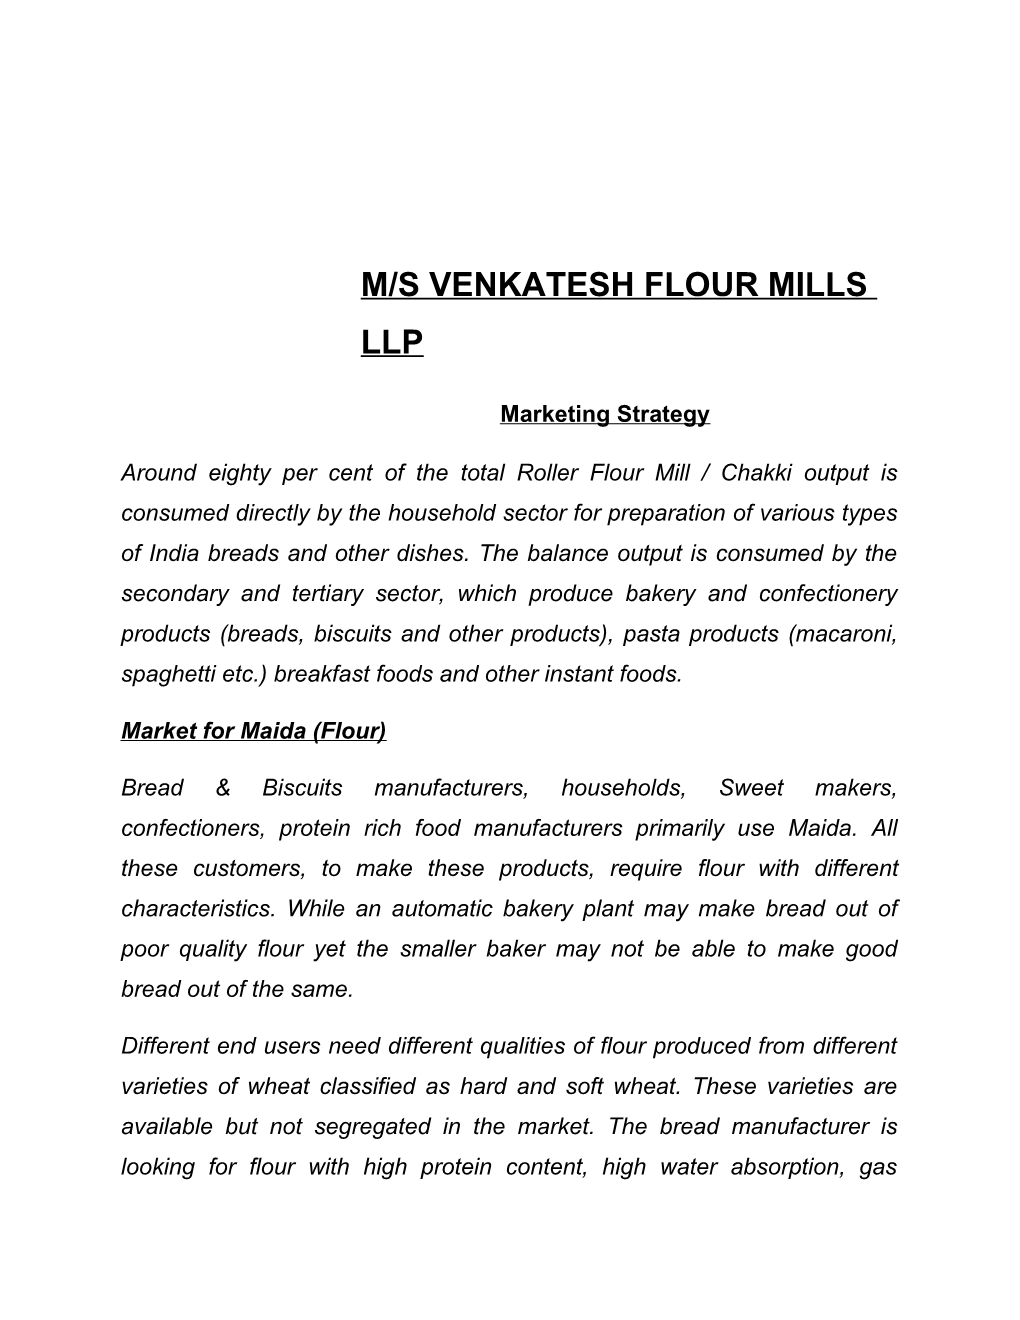 M/S Venkatesh Flour Mills Llp